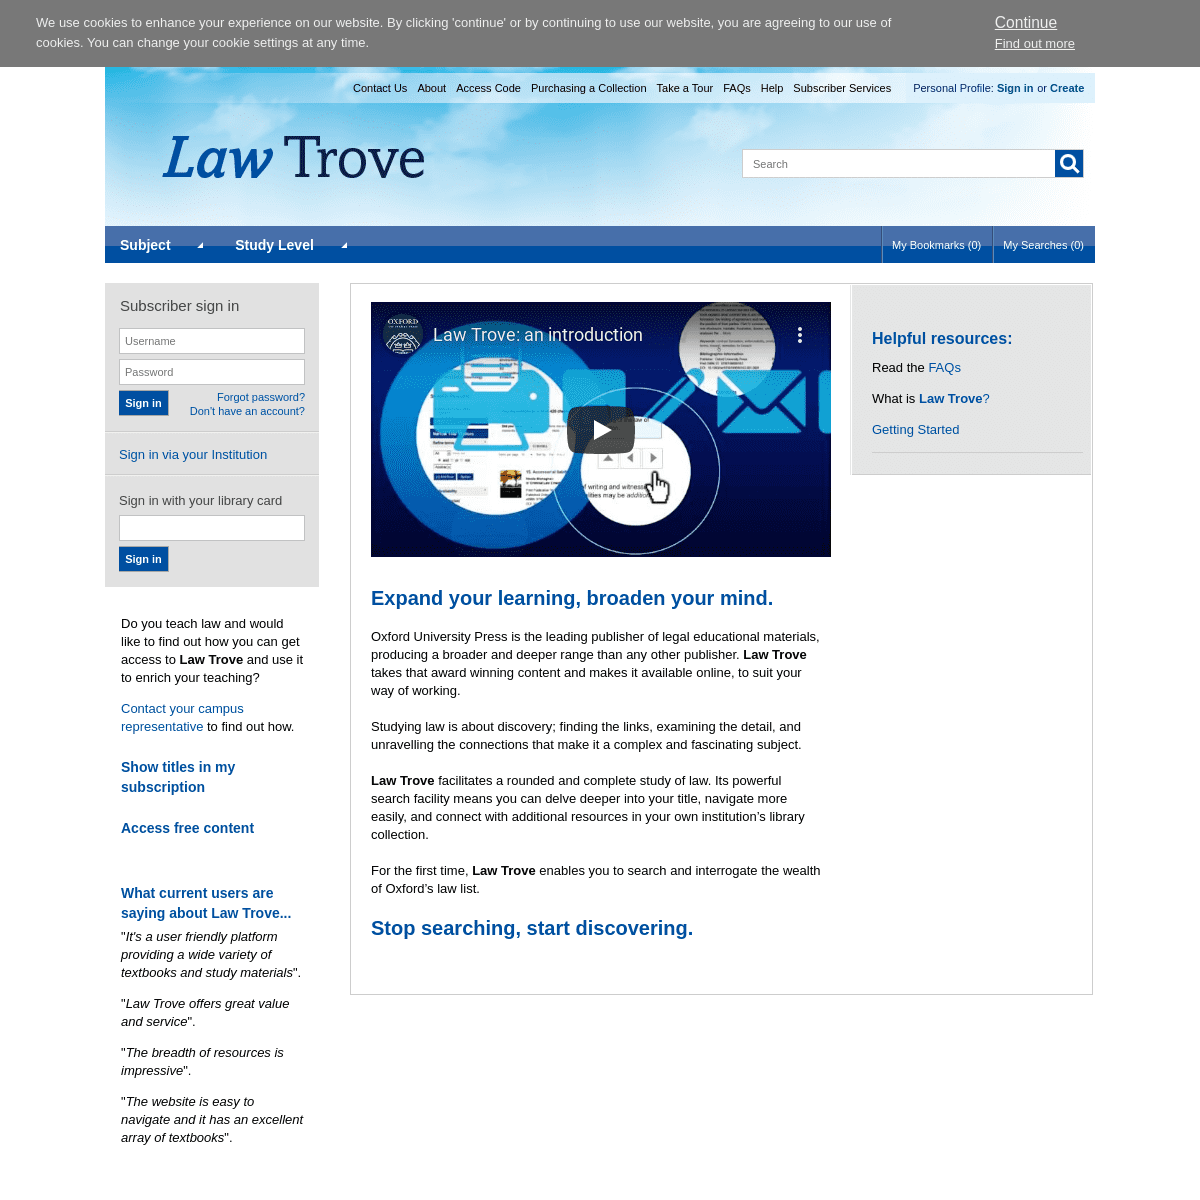 A complete backup of oxfordlawtrove.com